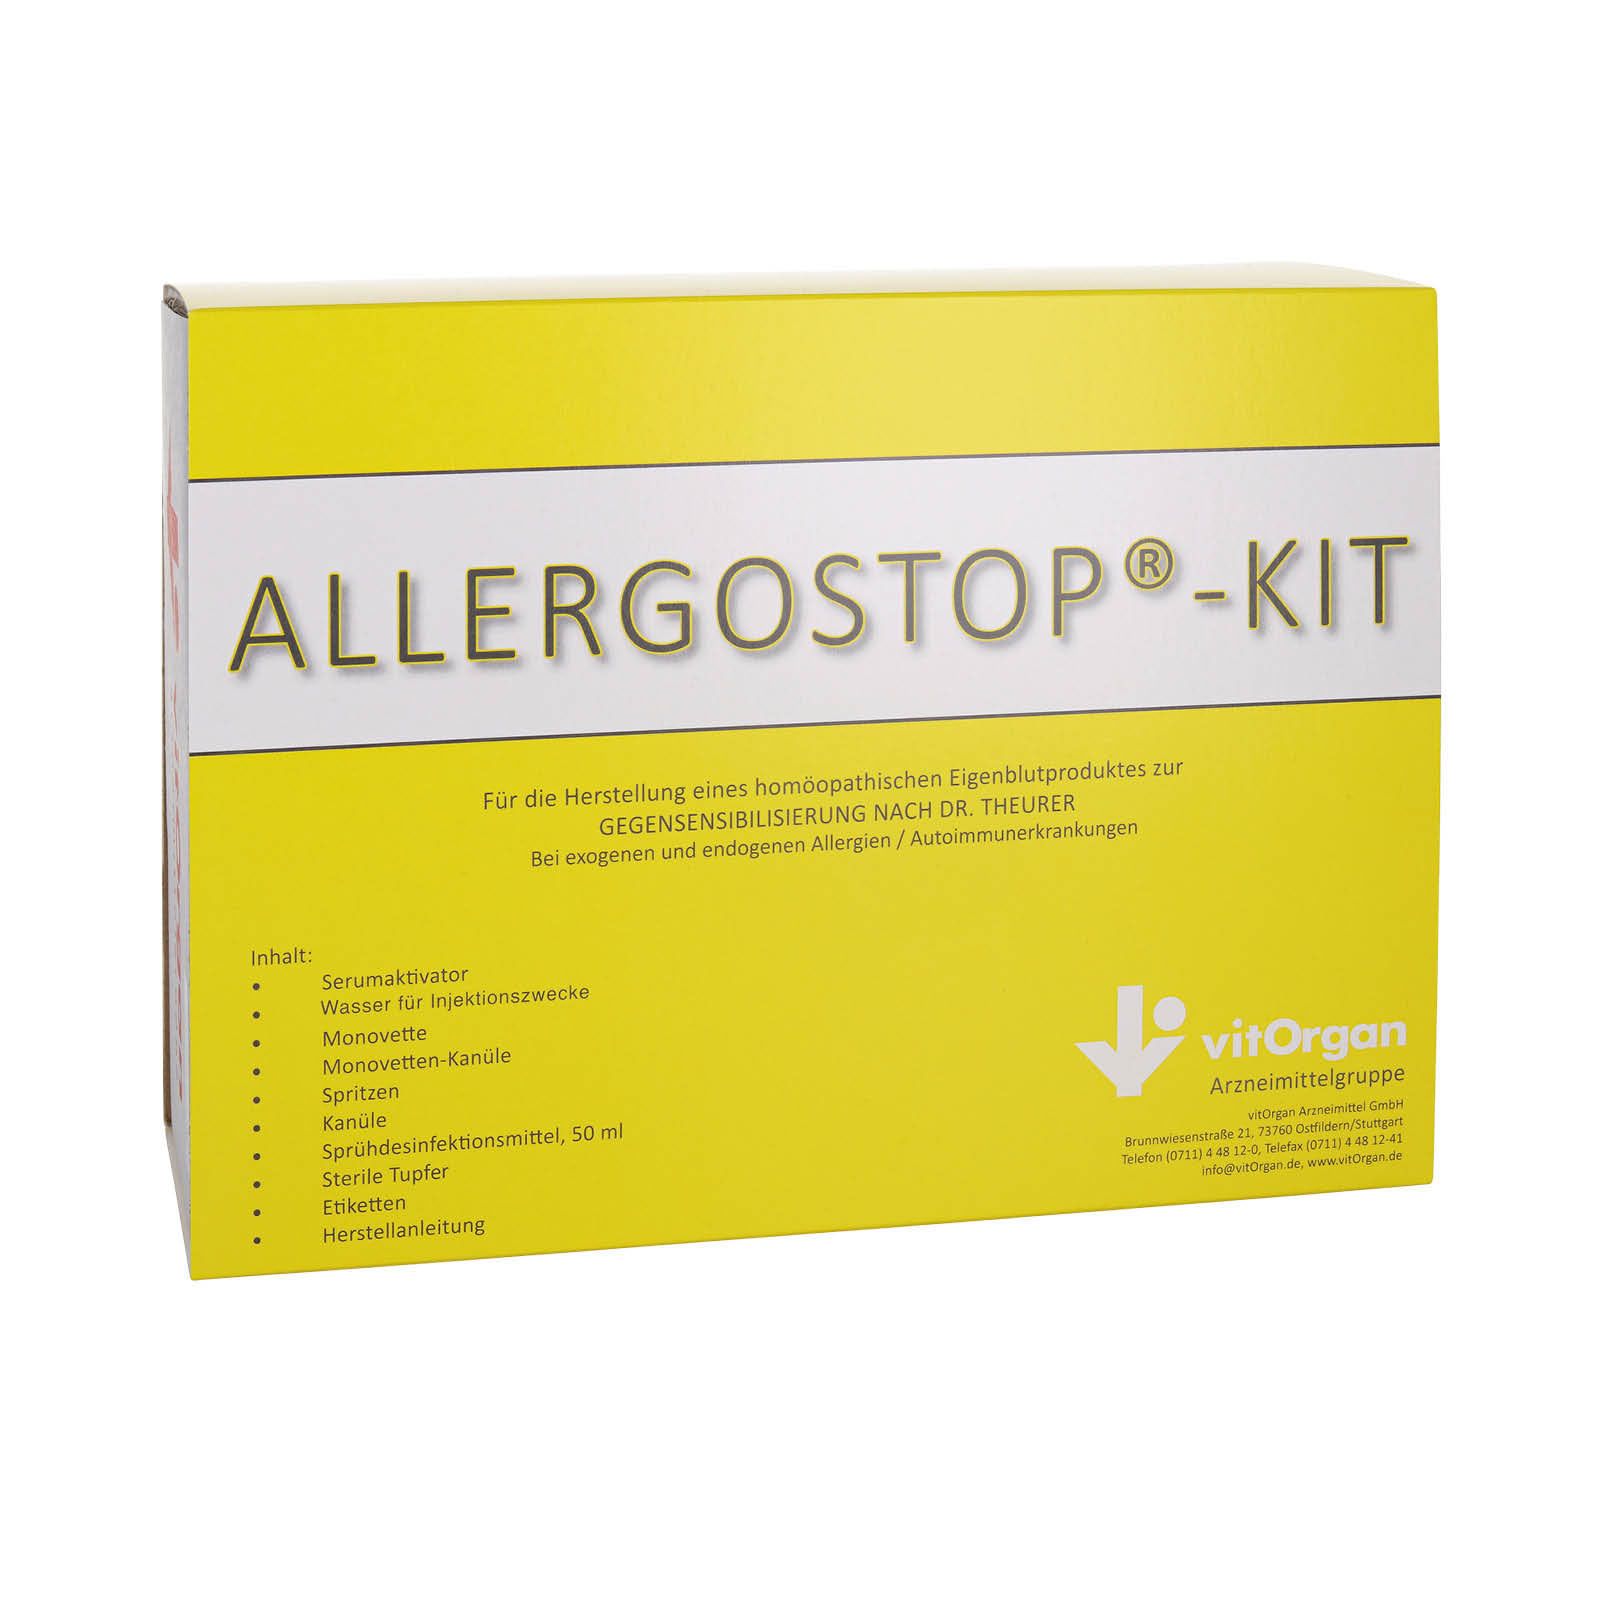 Allergostop®-Kit